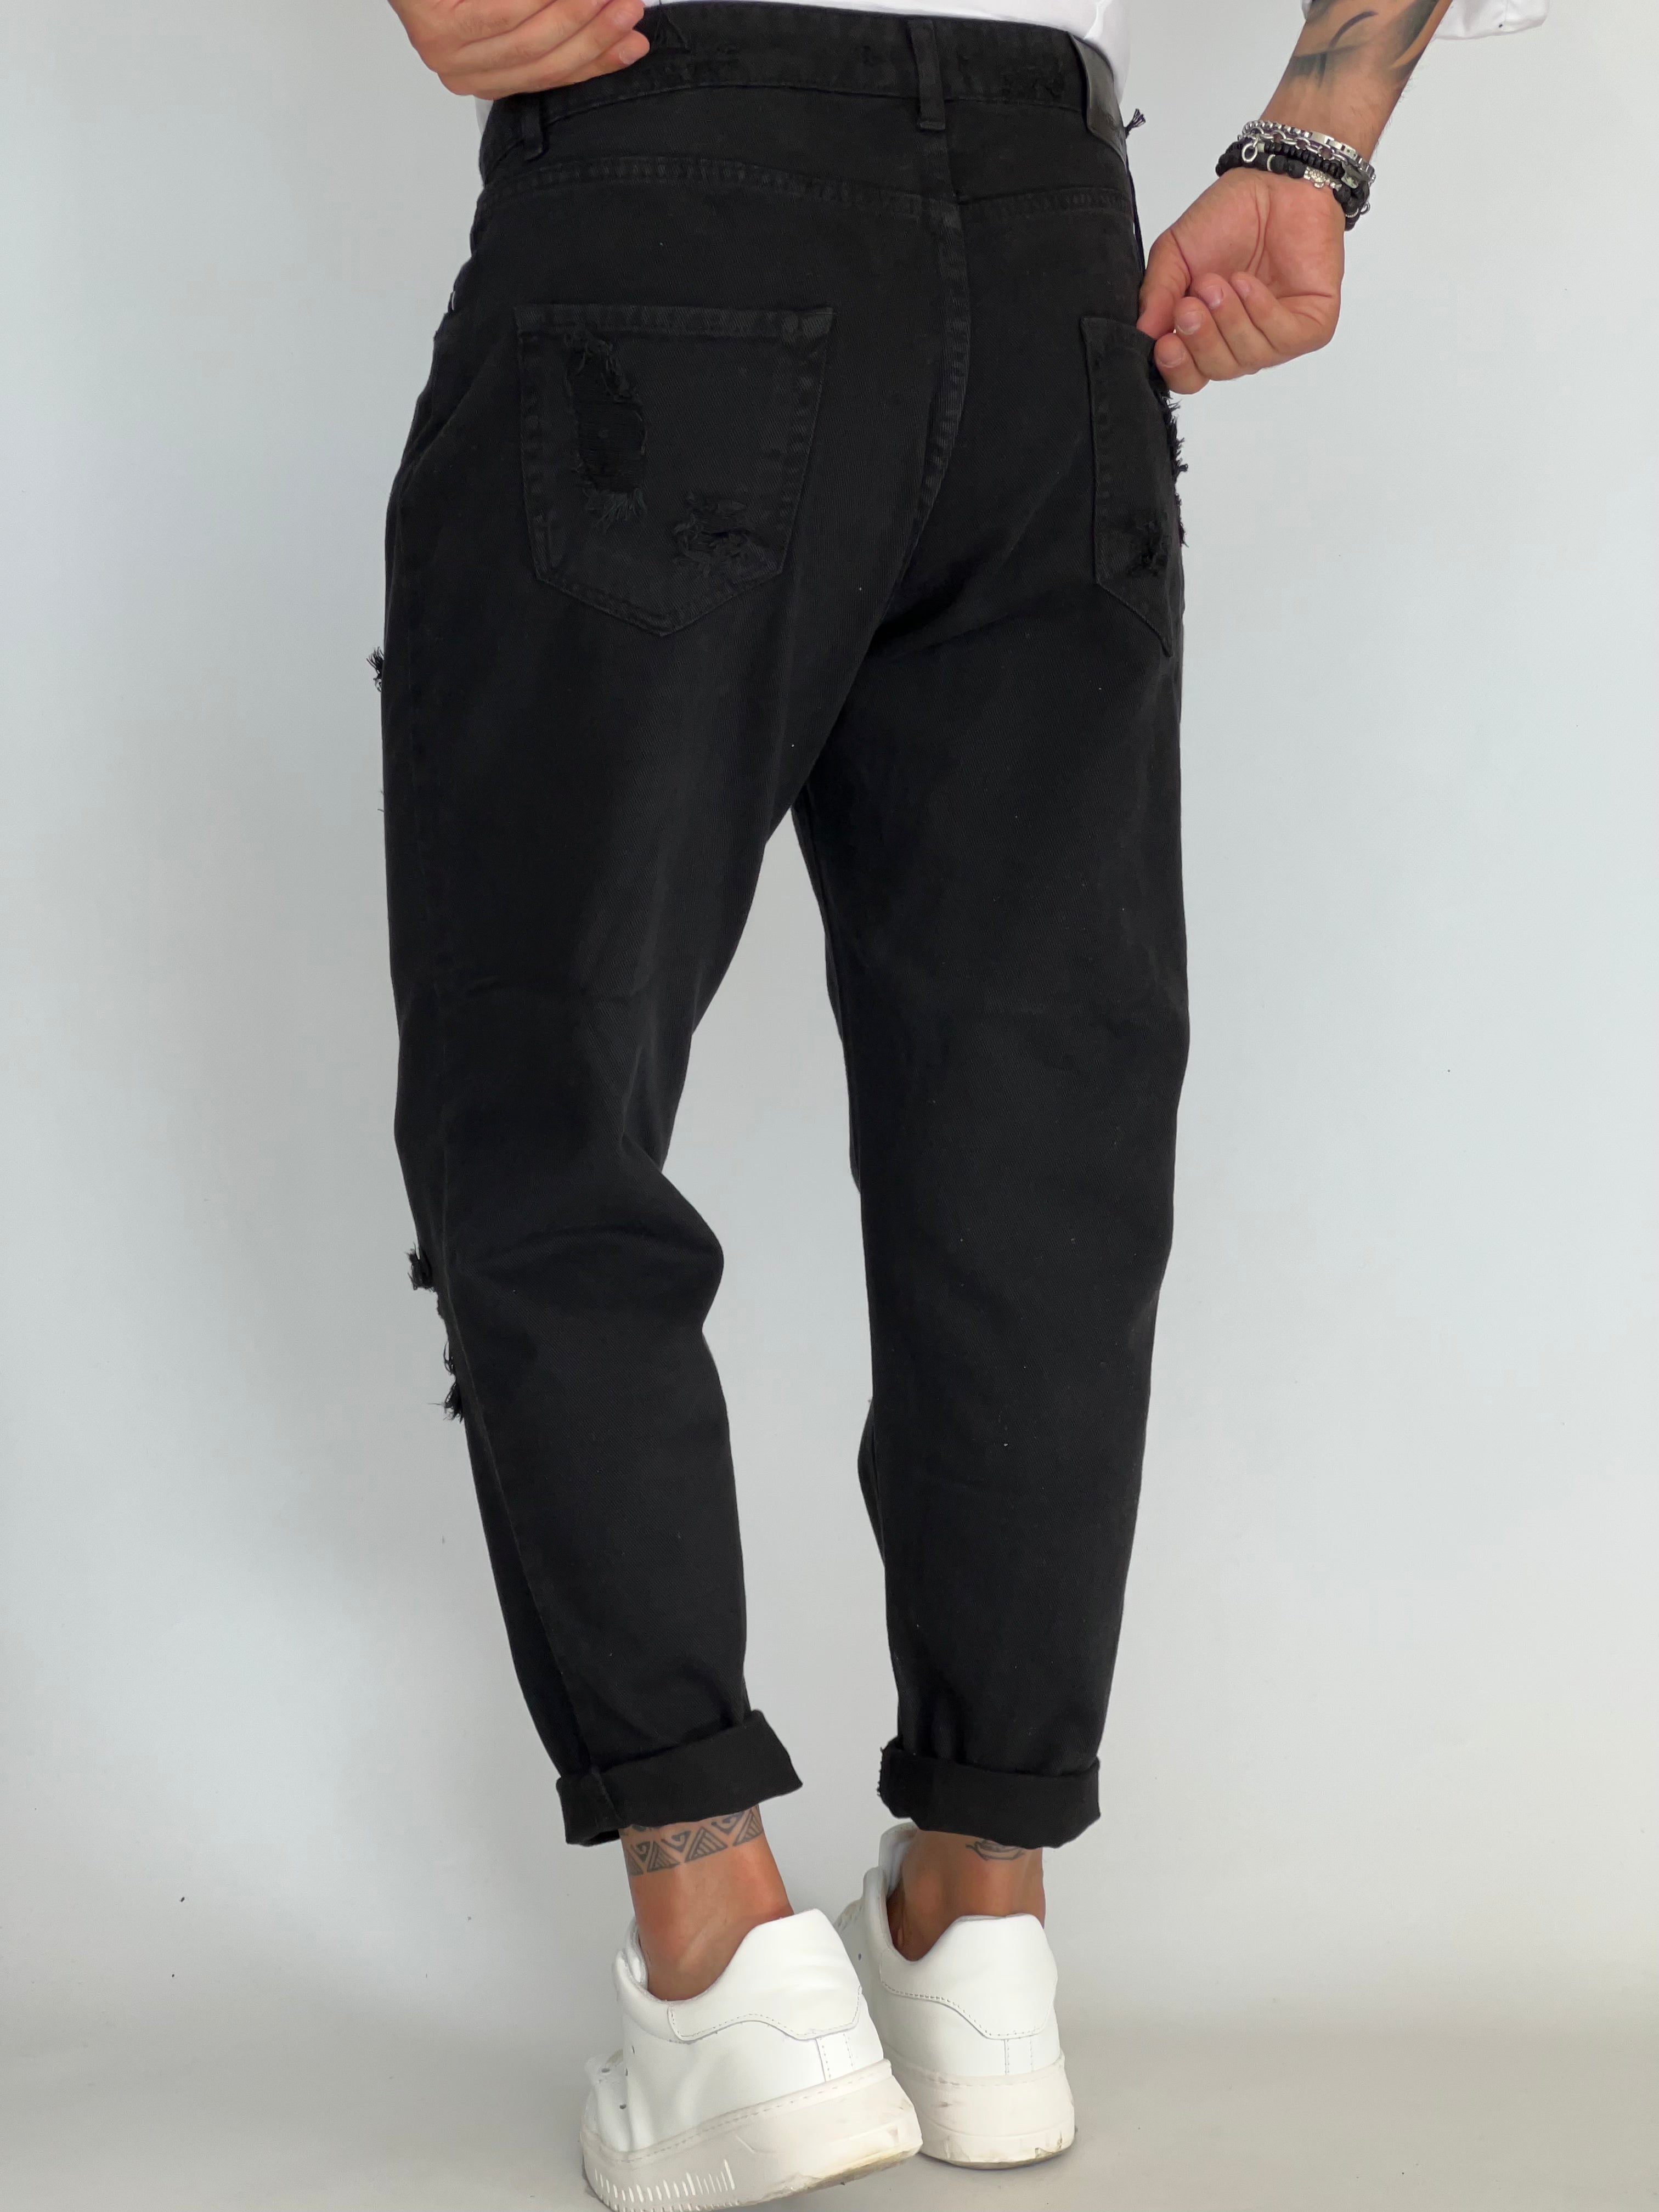 Pantalone loose fit nero GV81